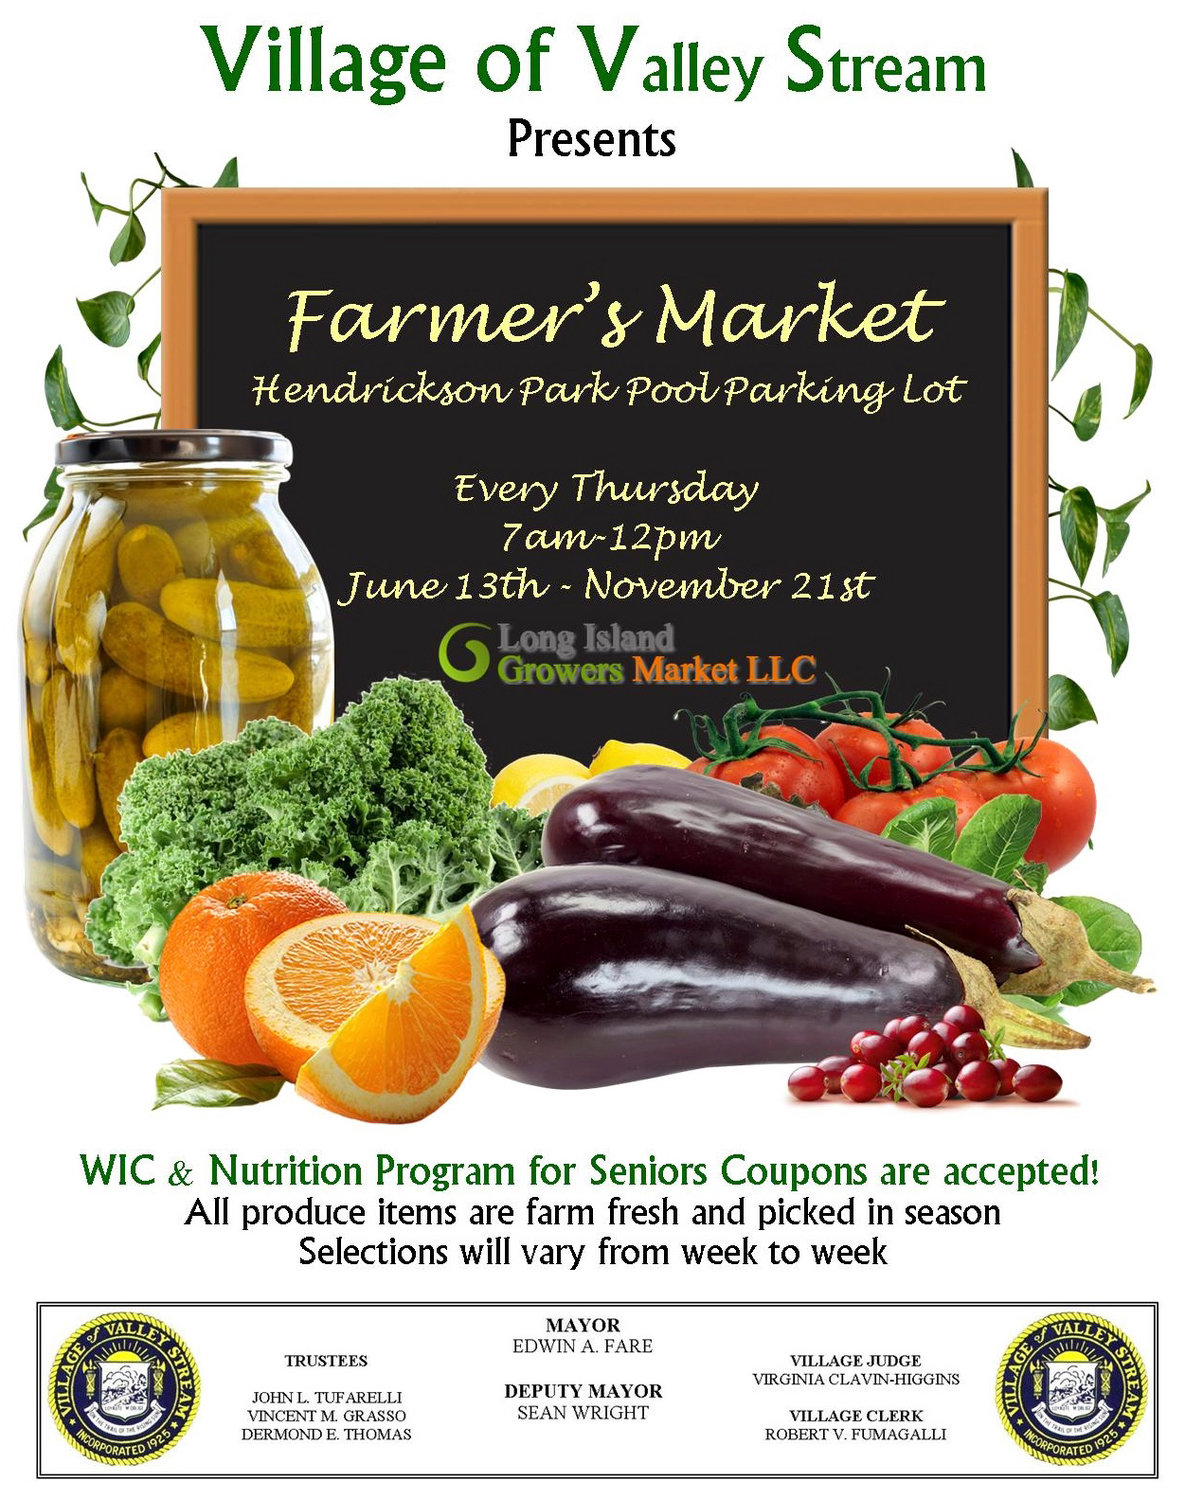 Farmers Market to open at Hendrickson Park Herald Community Newspapers www.liherald